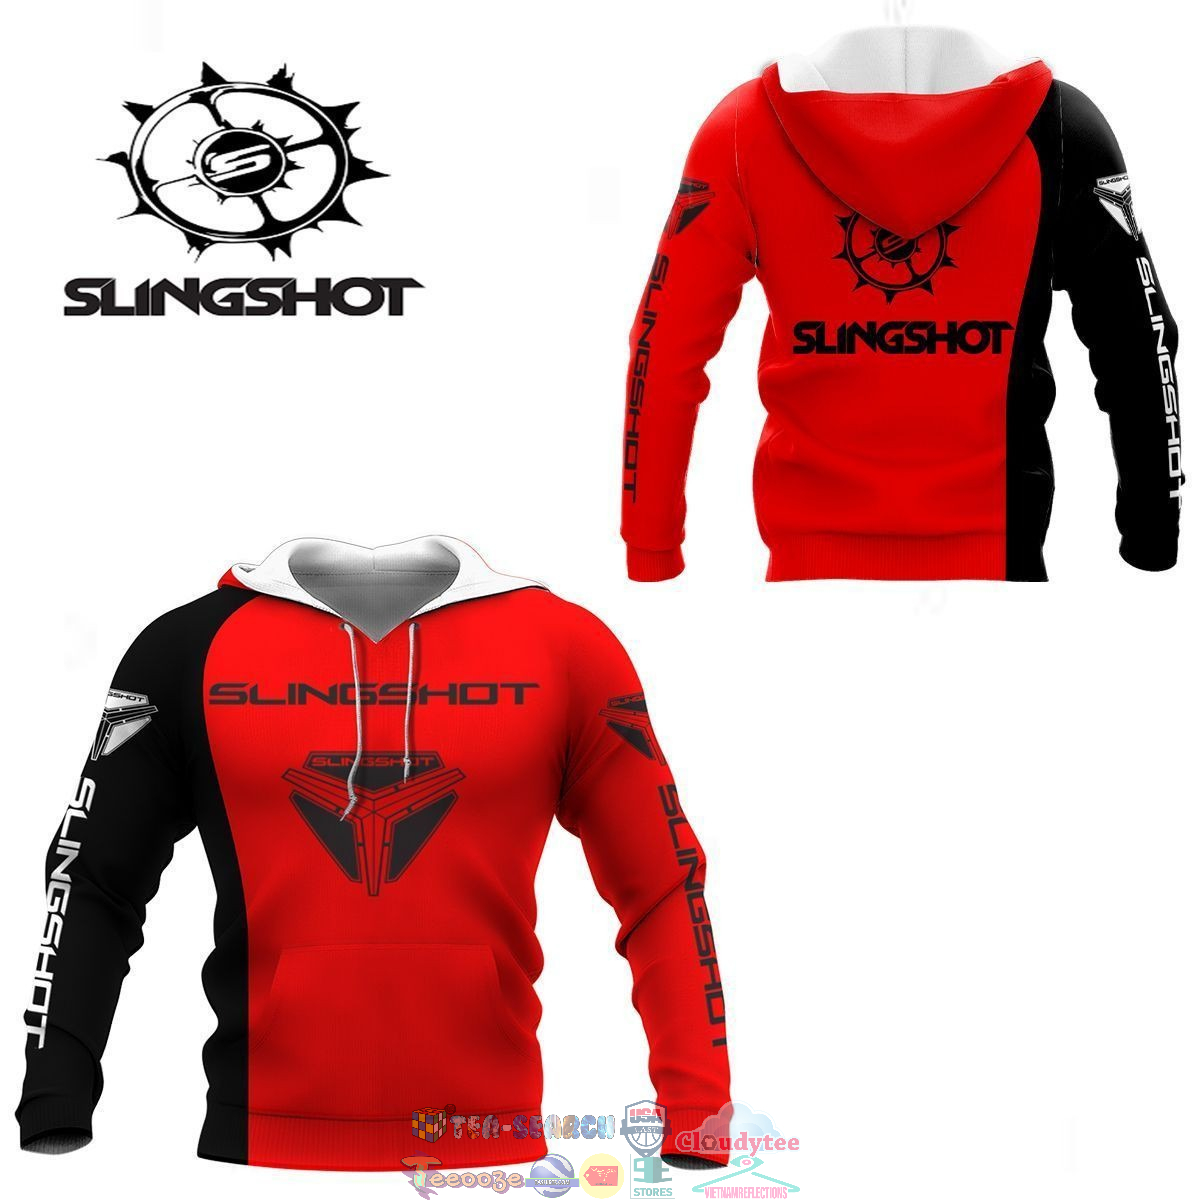 Slingshot ver 2 3D hoodie and t-shirt – Saleoff